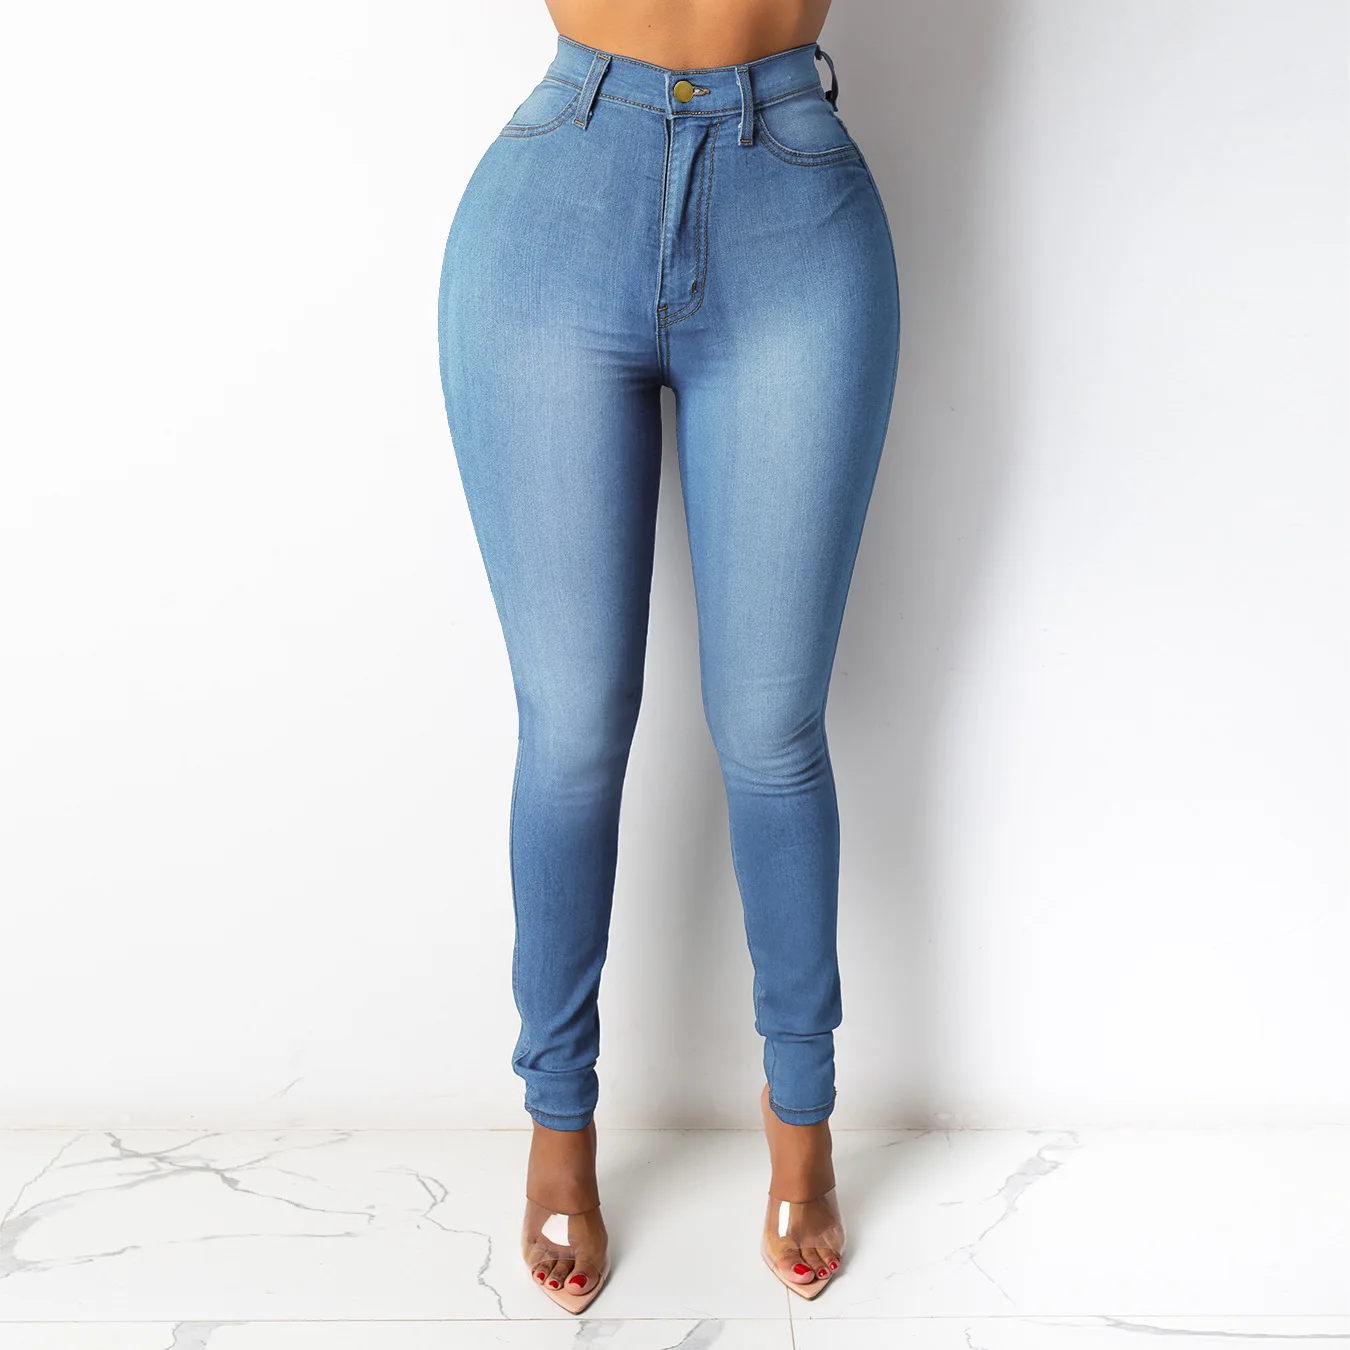 Black Skinny Jeans 2022 Spring Women Fashion Push Up High Waist Slim Fit Jeans Jeggings Woman Vintage Blue Denim Pencil Trousers blue jeans